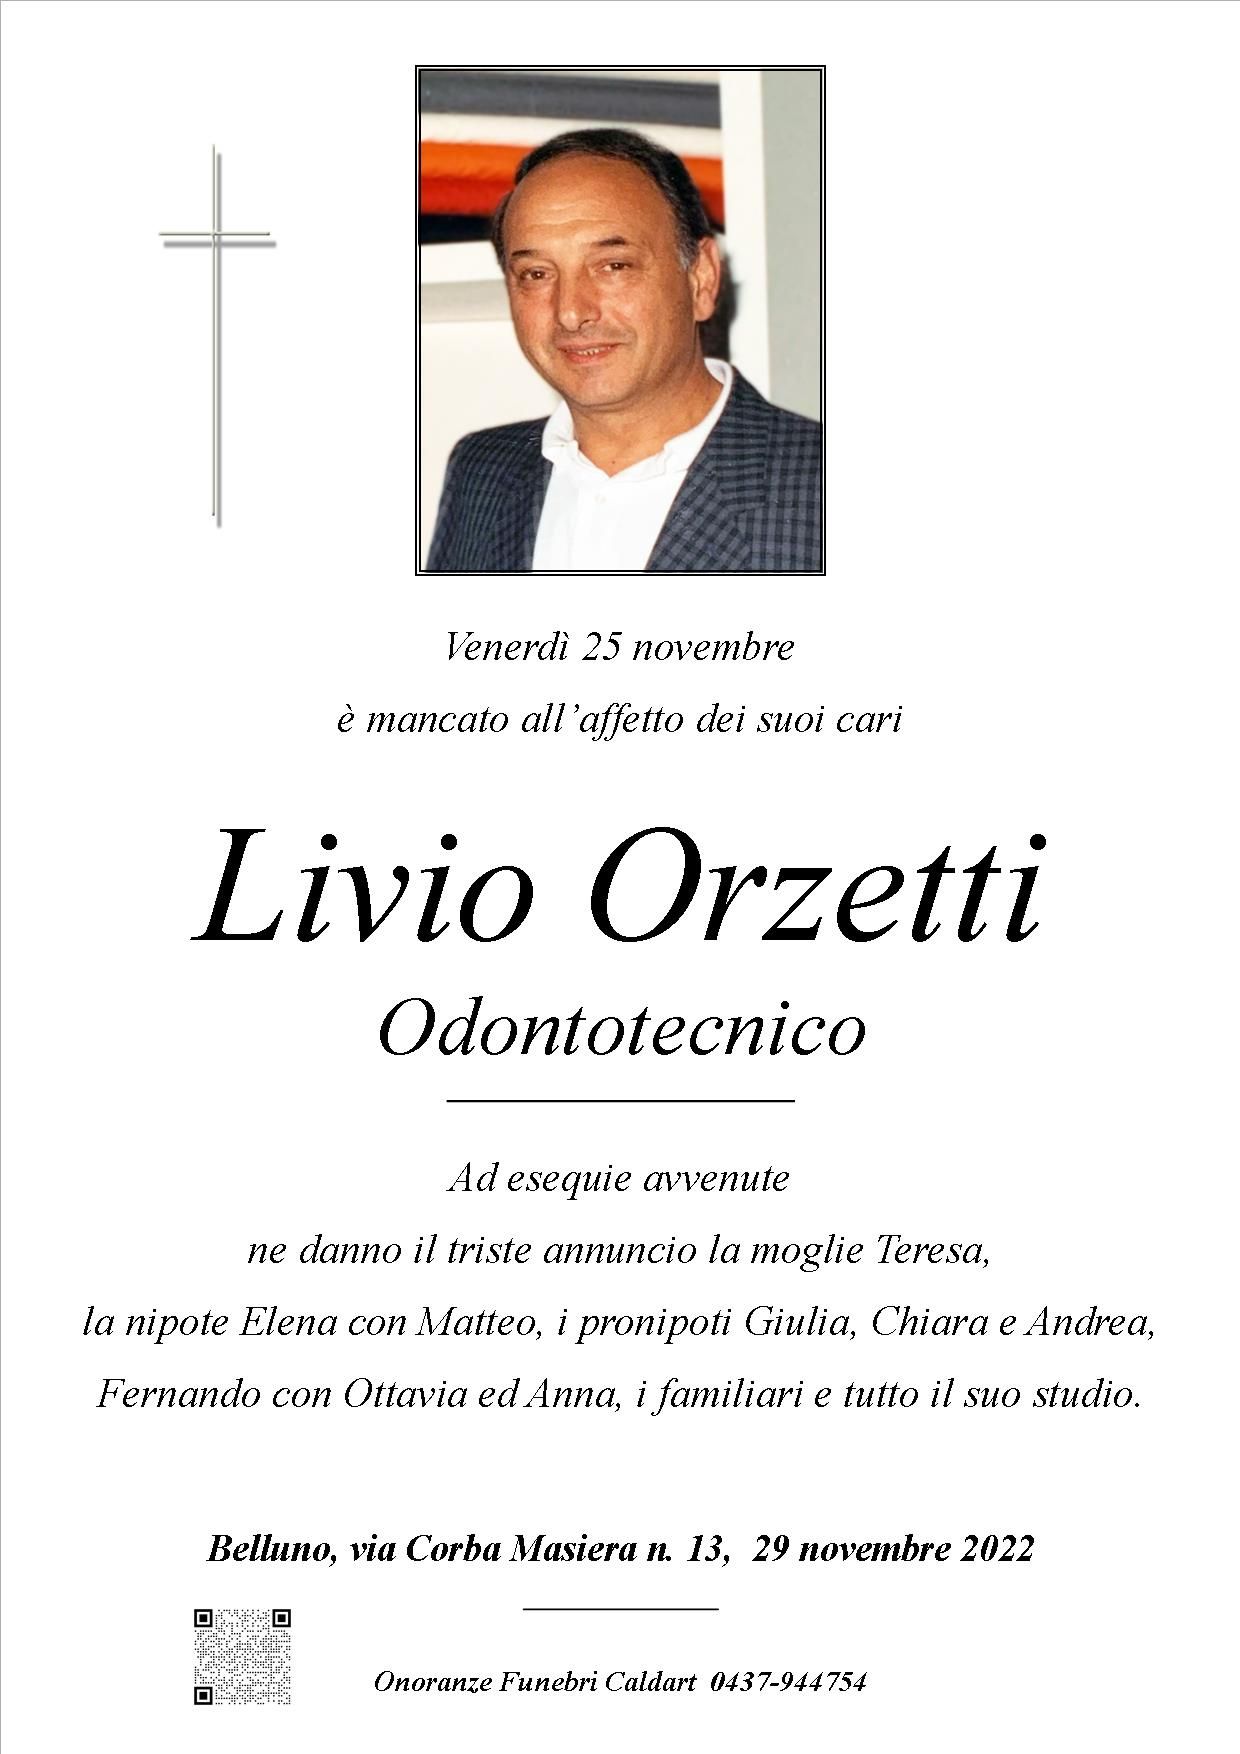 Orzetti Livio